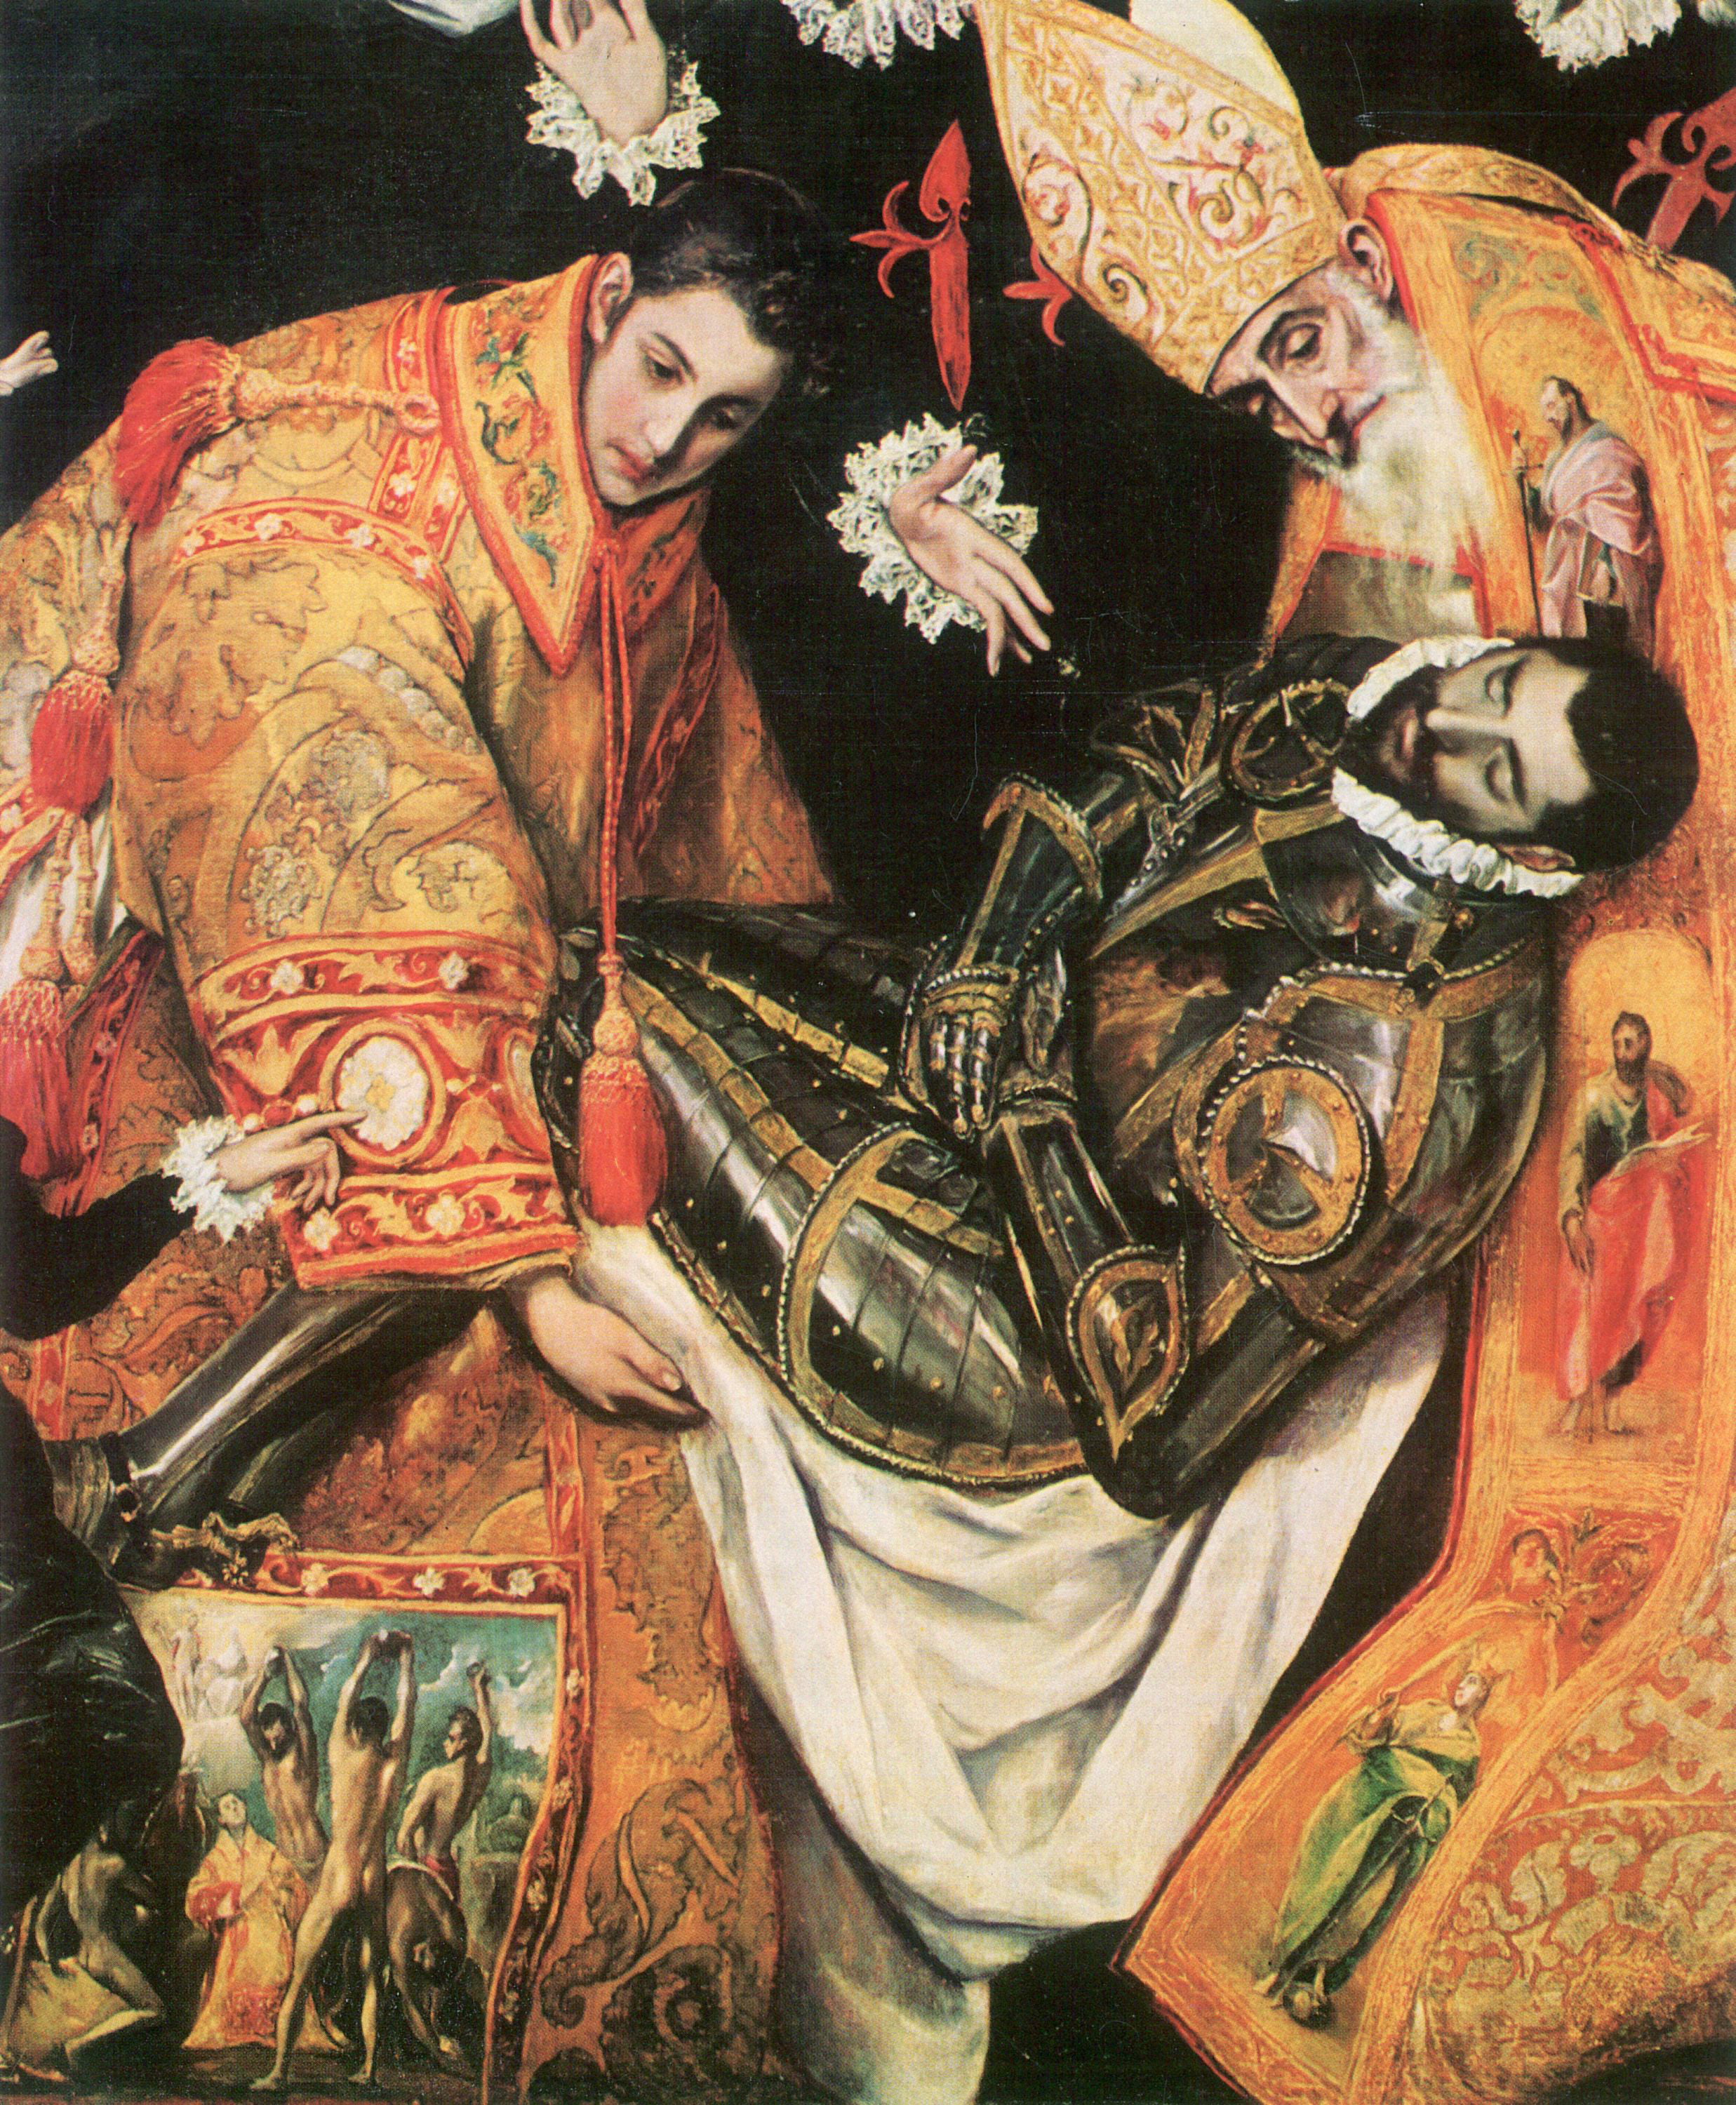 Greco, El The Burial of Count Orgaz, detail [2]12 Inch